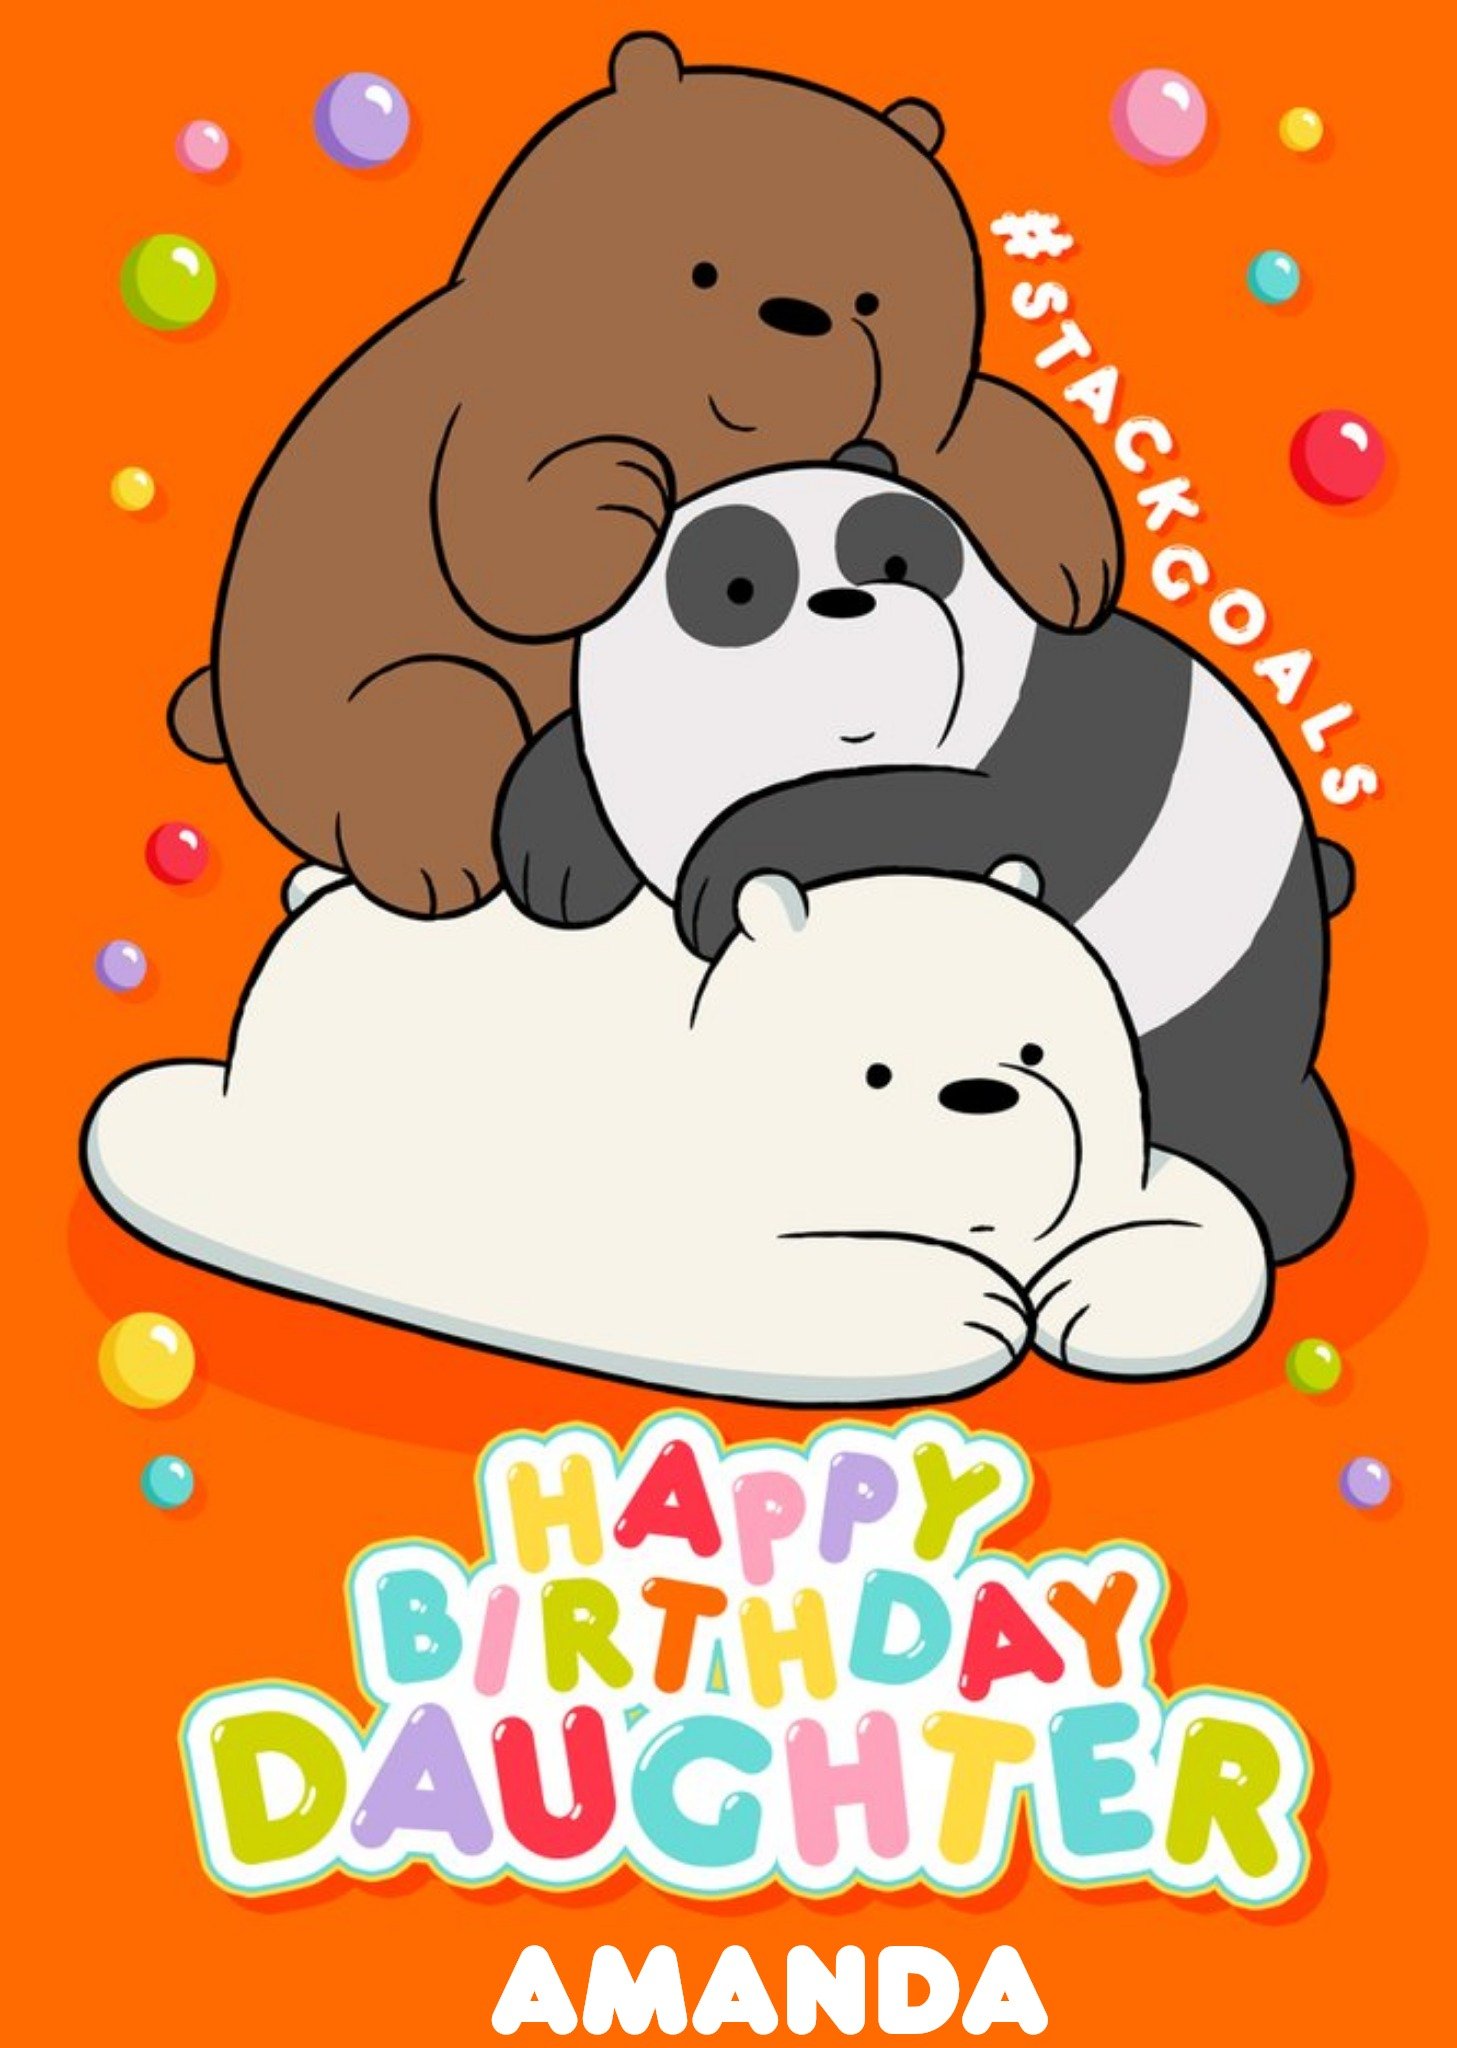 Moonpig We Bare Bears Happy Birthday Daughter Personalised Card Ecard